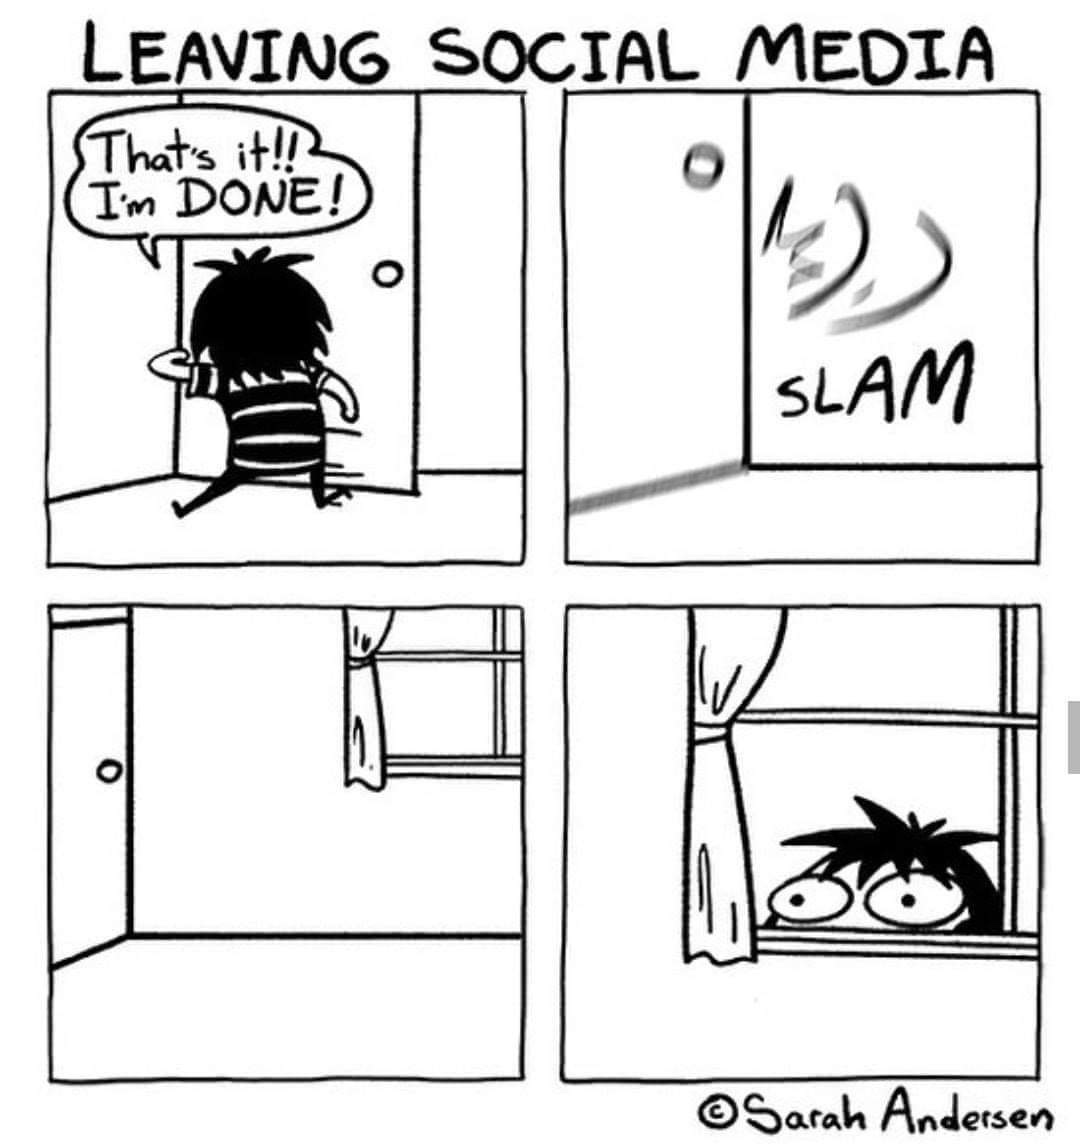 leaving social media meme - Leaving Social Media That's it!! I'm Done! Slam Sarah Andersen